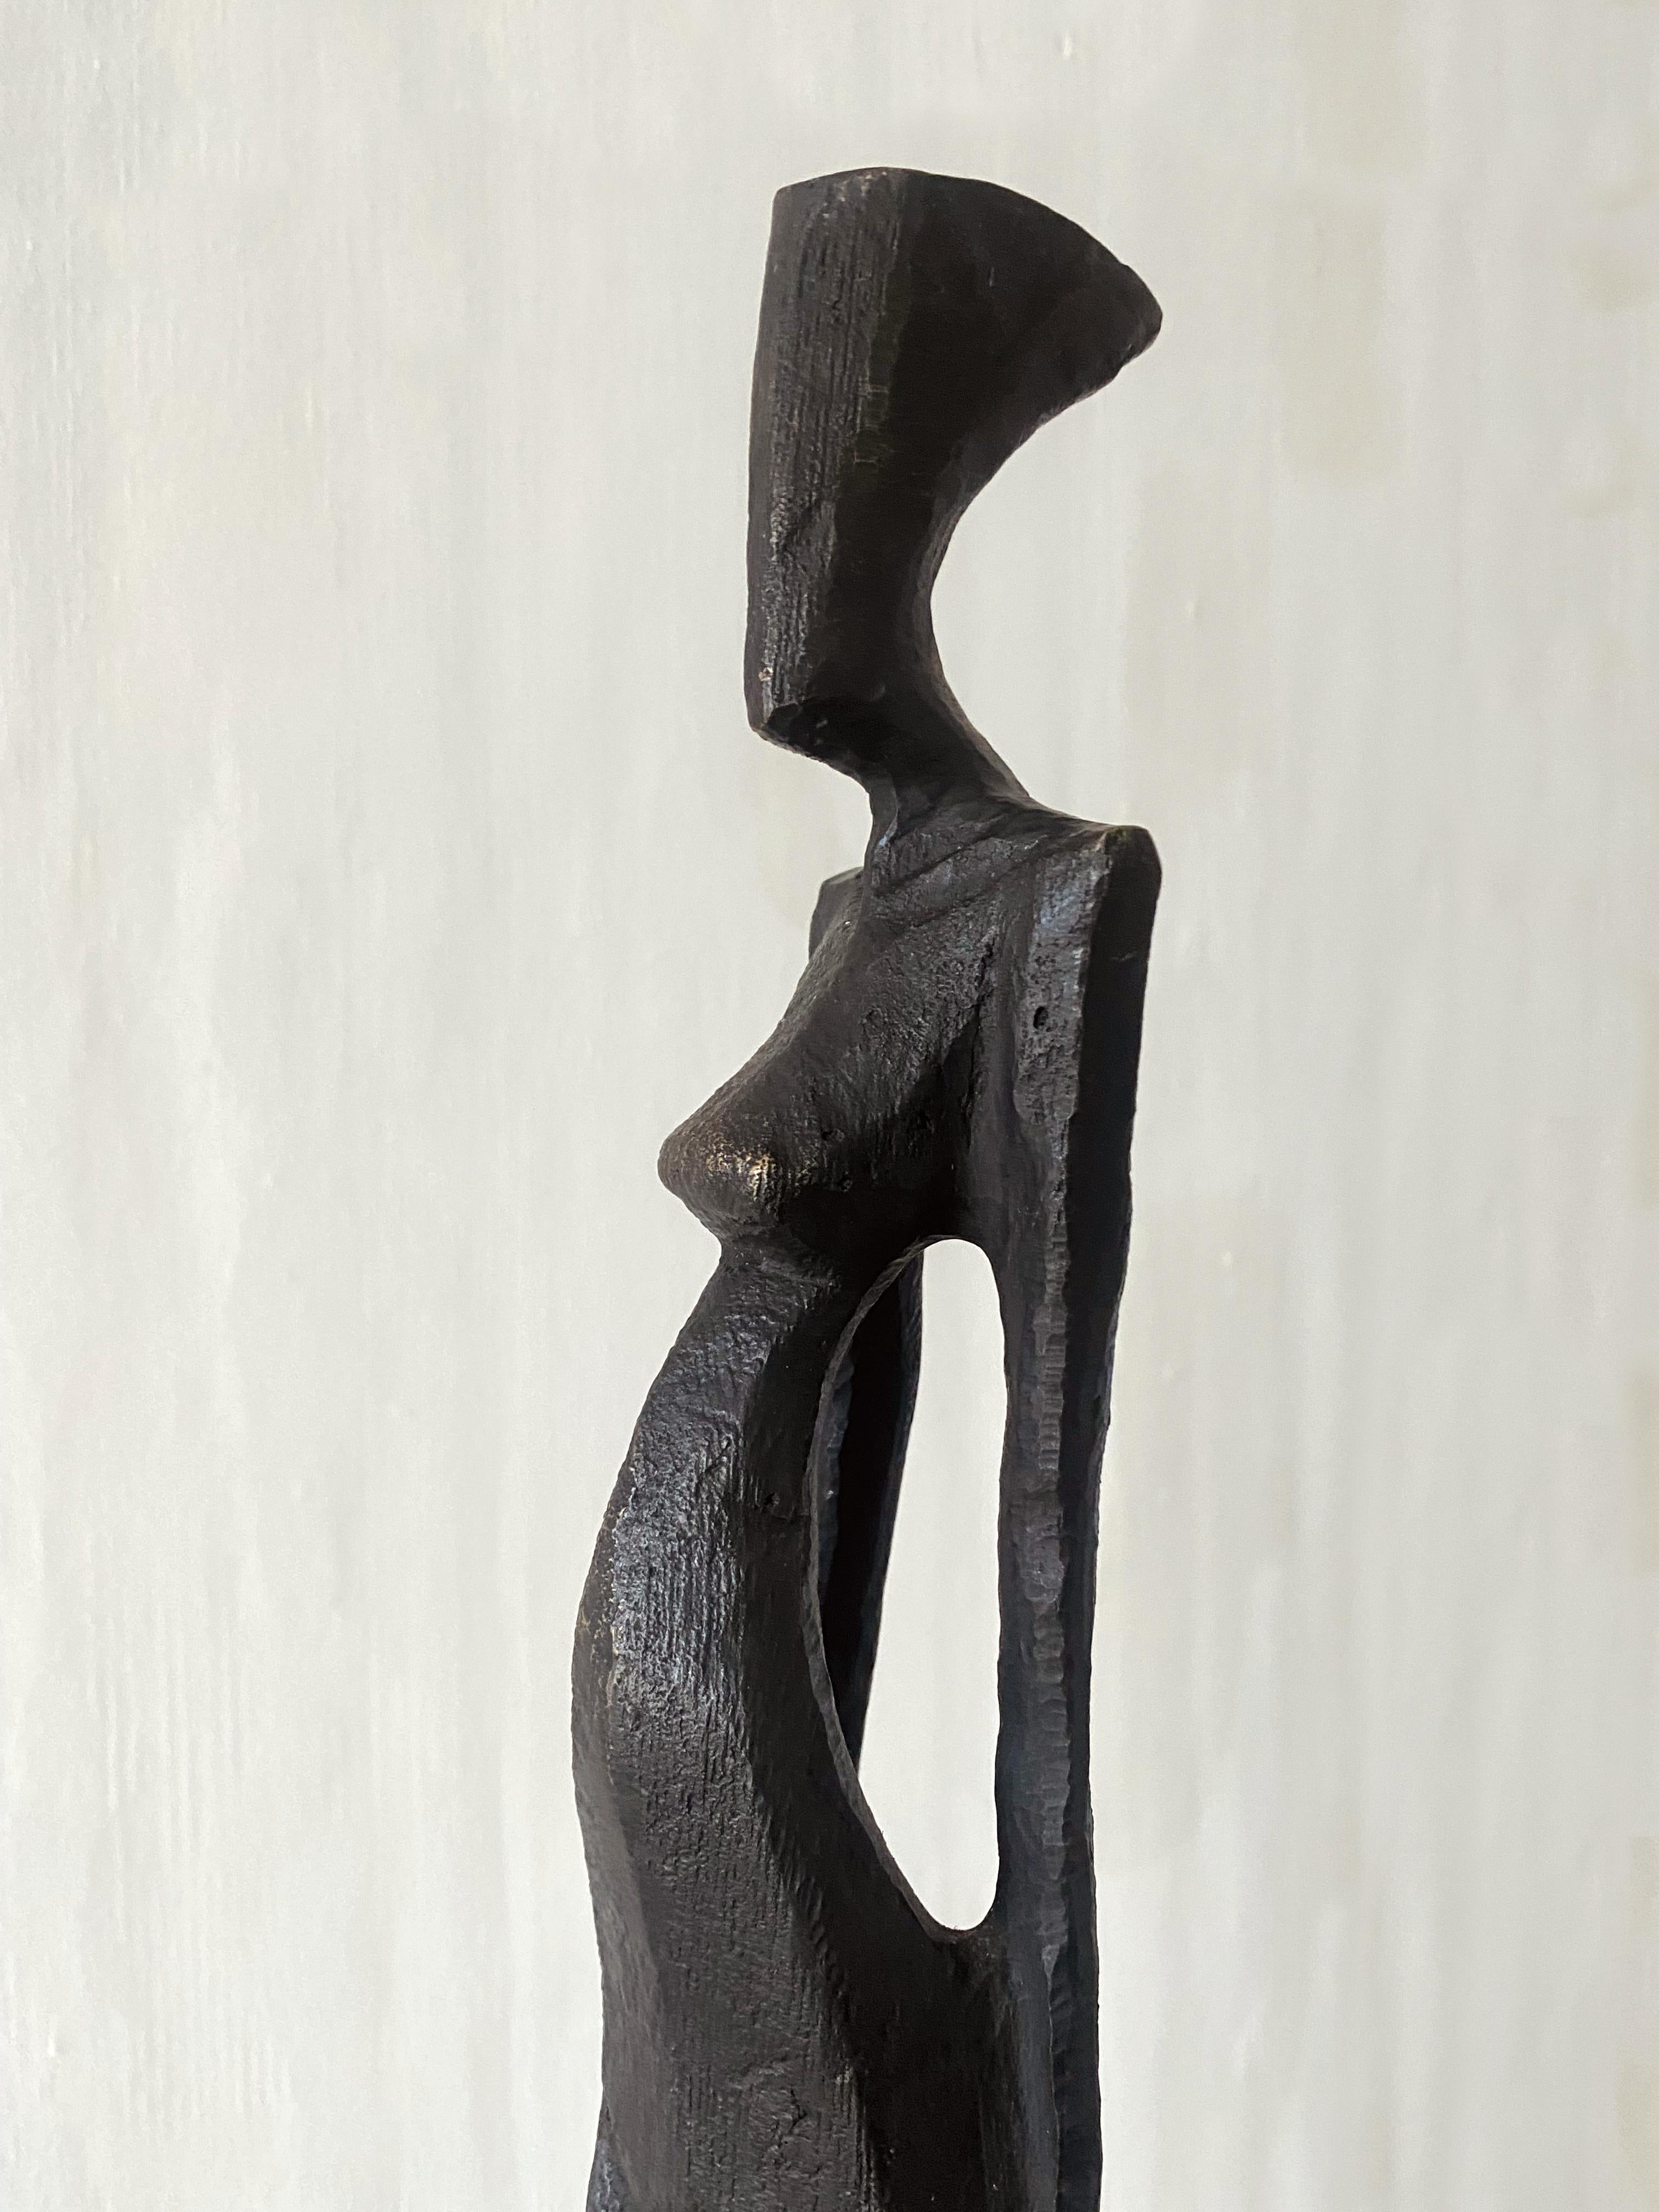 Kathy by Nando Kallweit. Tall, elegant bronze sculpture of human figure. 2